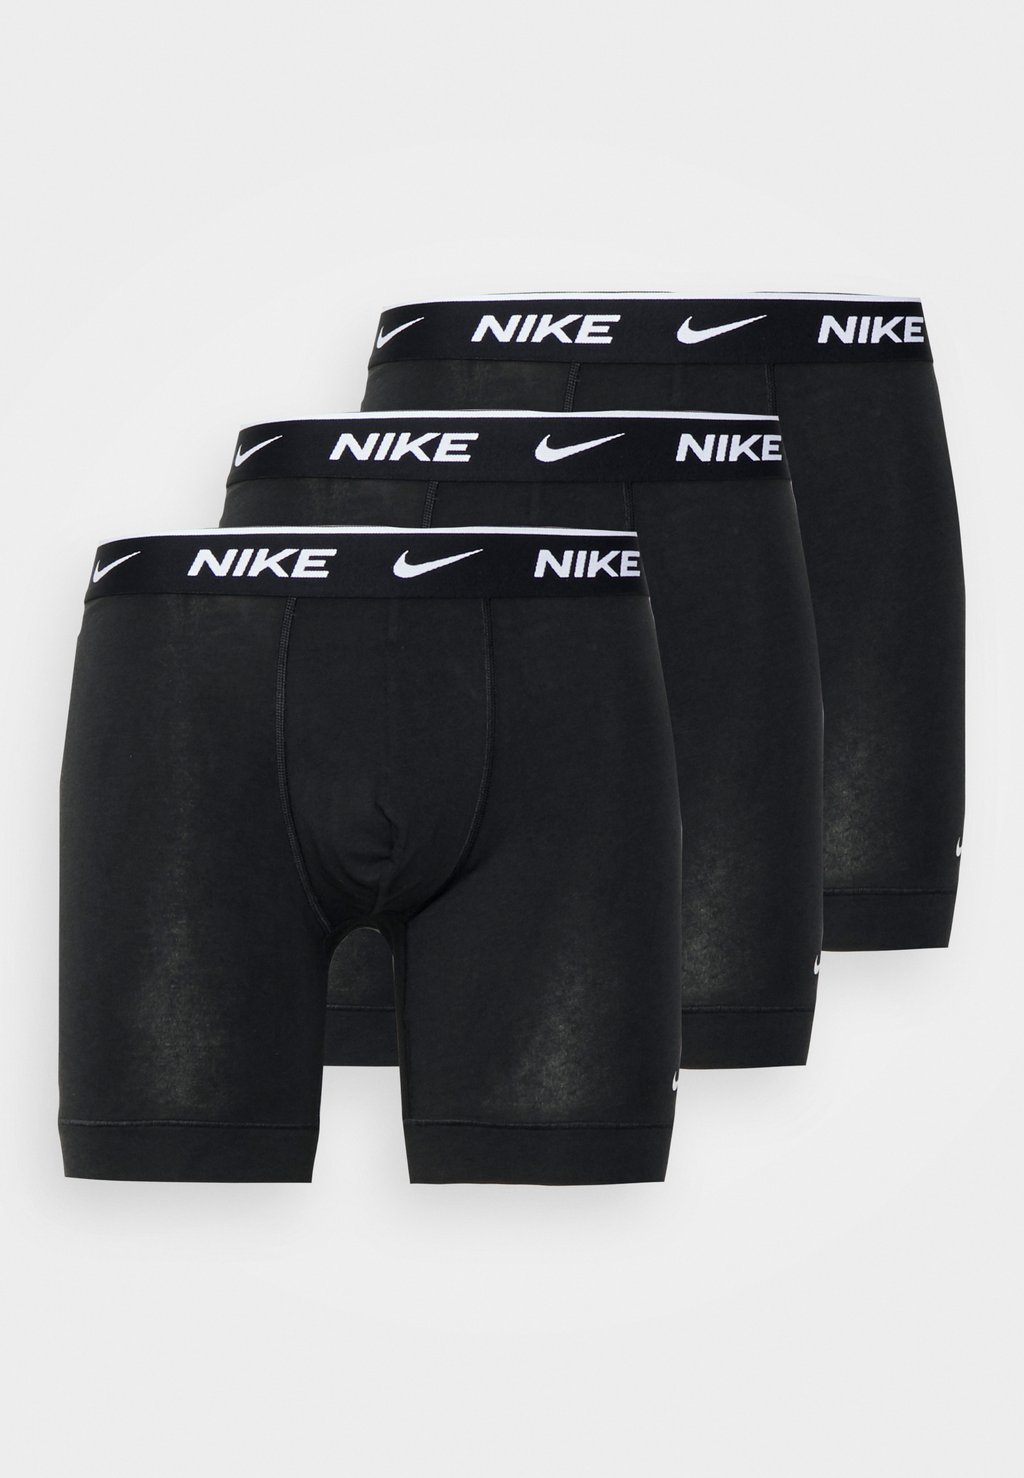 Трусики BRIEF 3 PACK Nike Underwear, цвет black/black/black